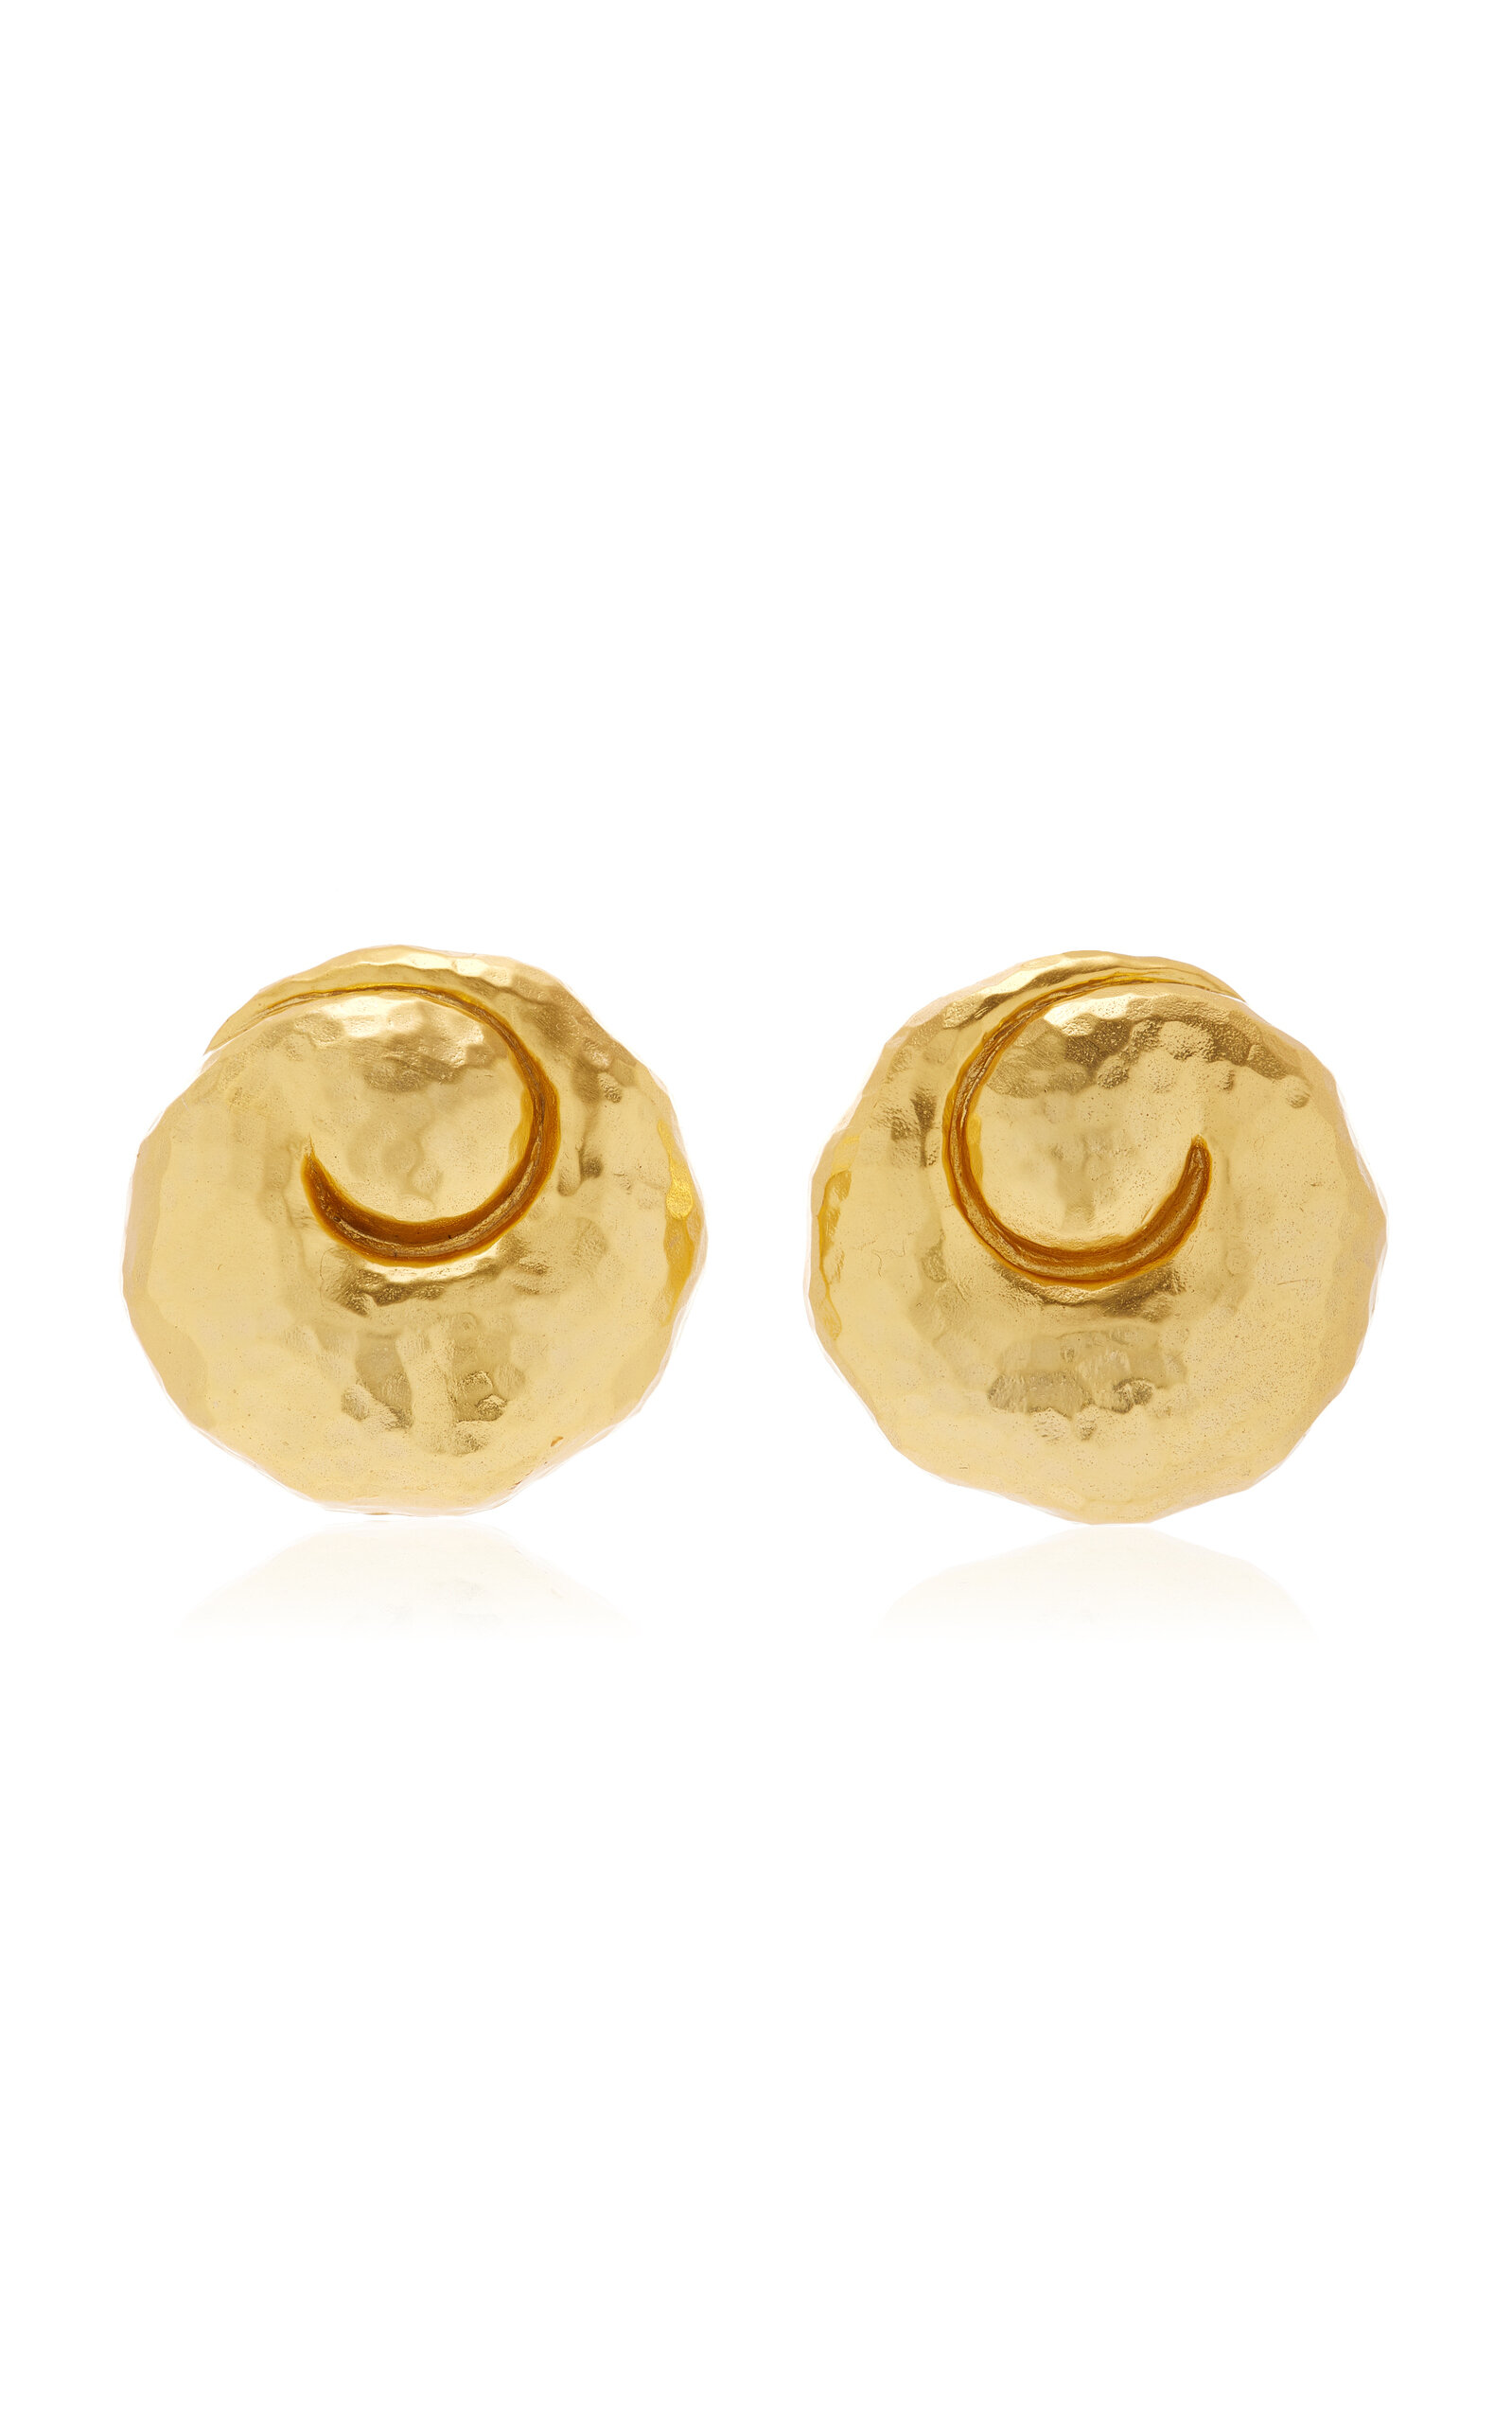 Leela 24K Gold-Plated Earrings